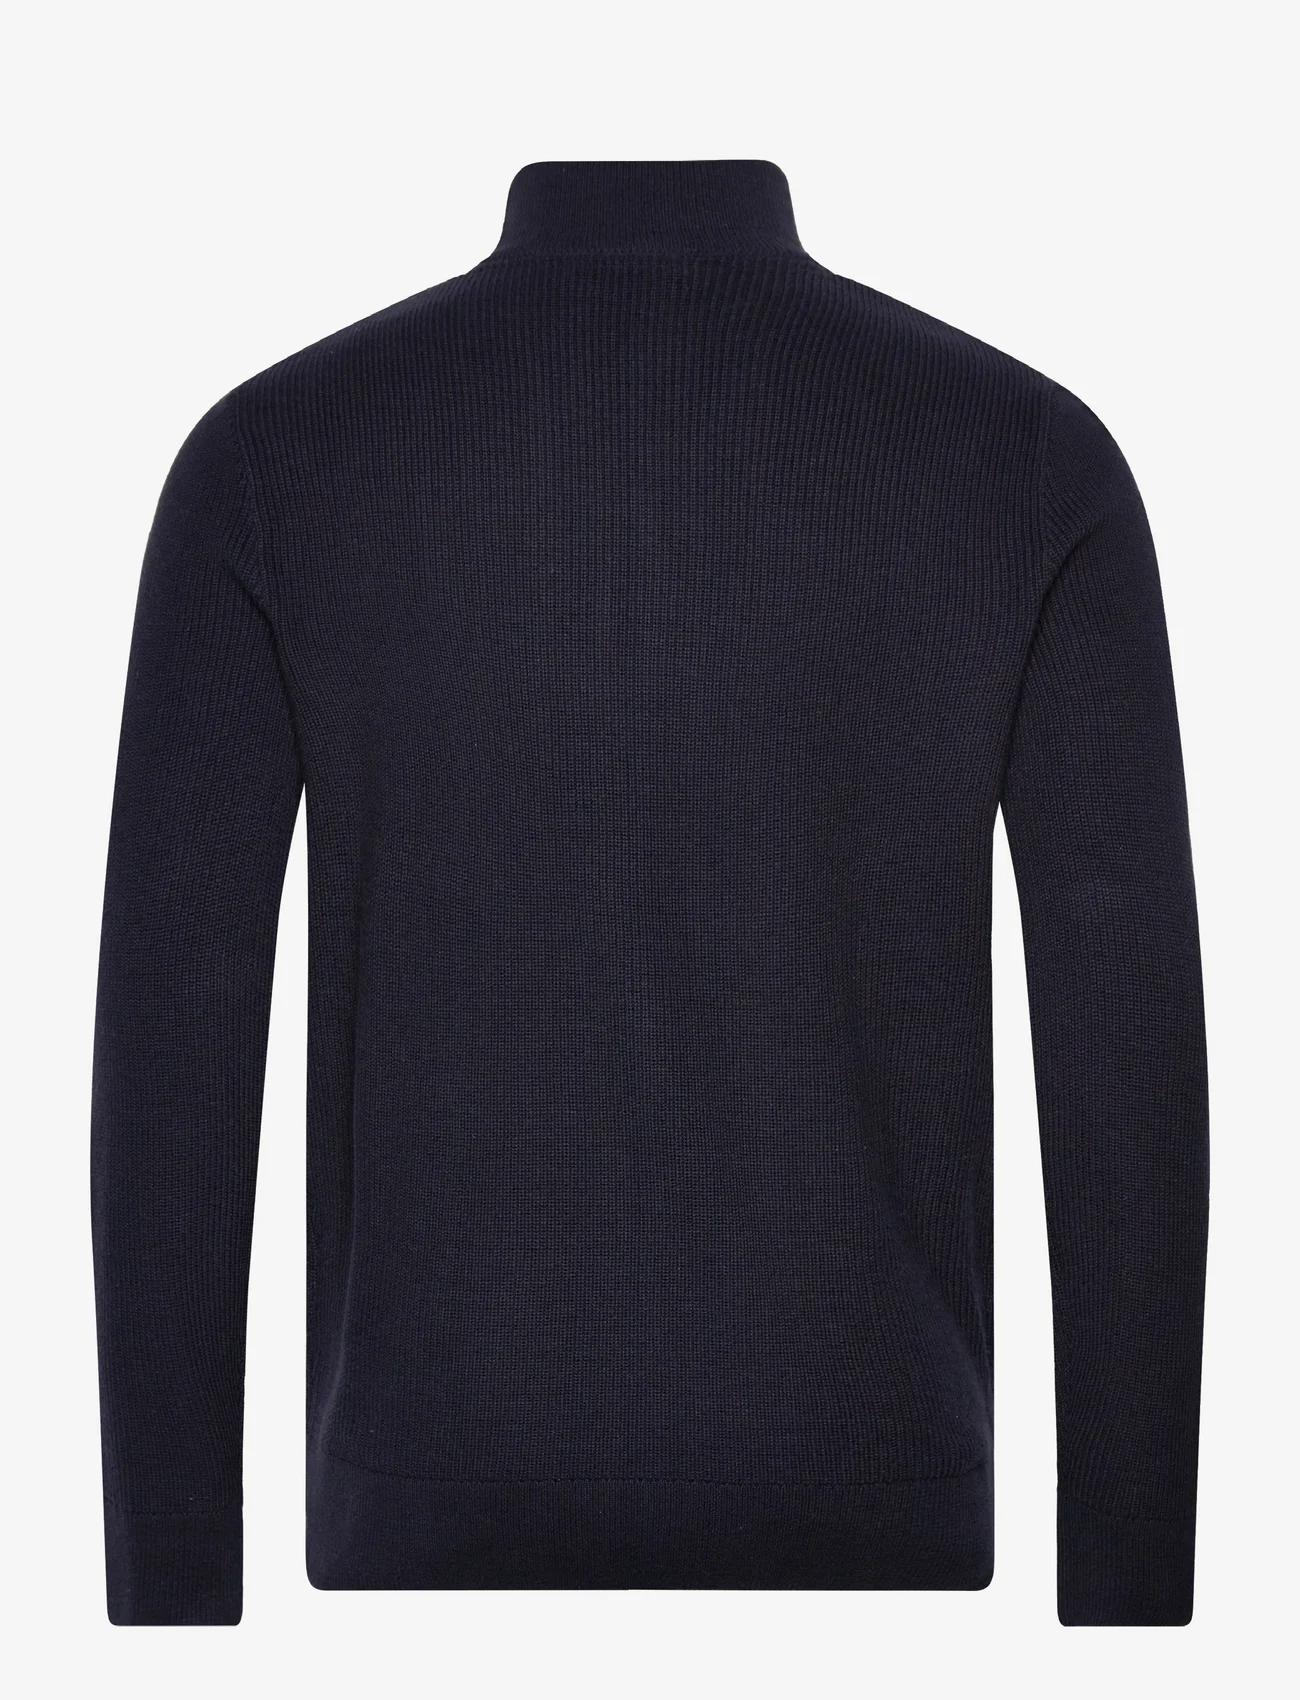 Tom Tailor - structure mix knit jacket - geburtstagsgeschenke - knitted navy melange - 1